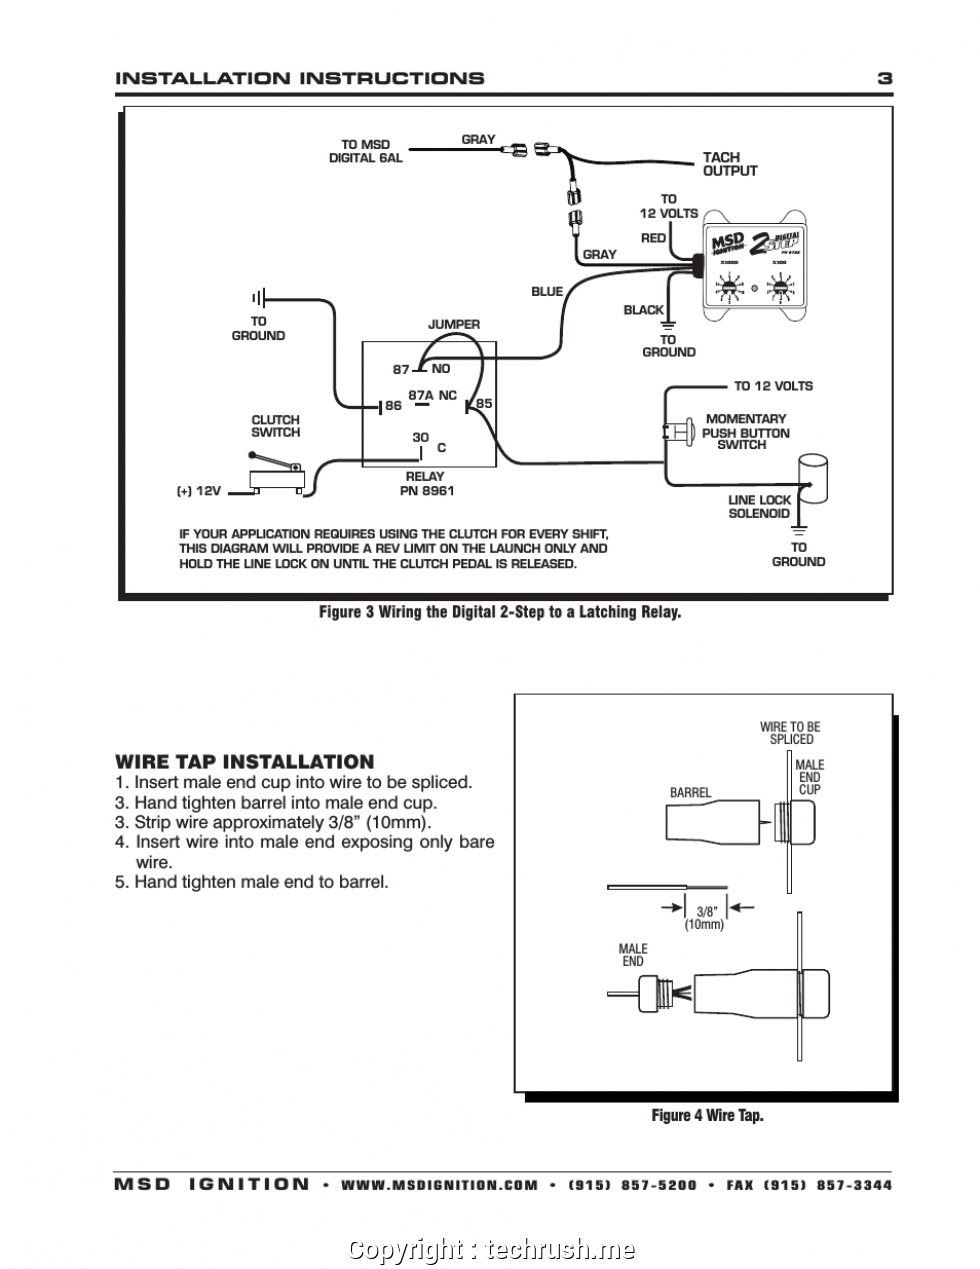 Msd Wiring Diagrams Brianesser Msd 2 Step Wiring Diagram Wiring